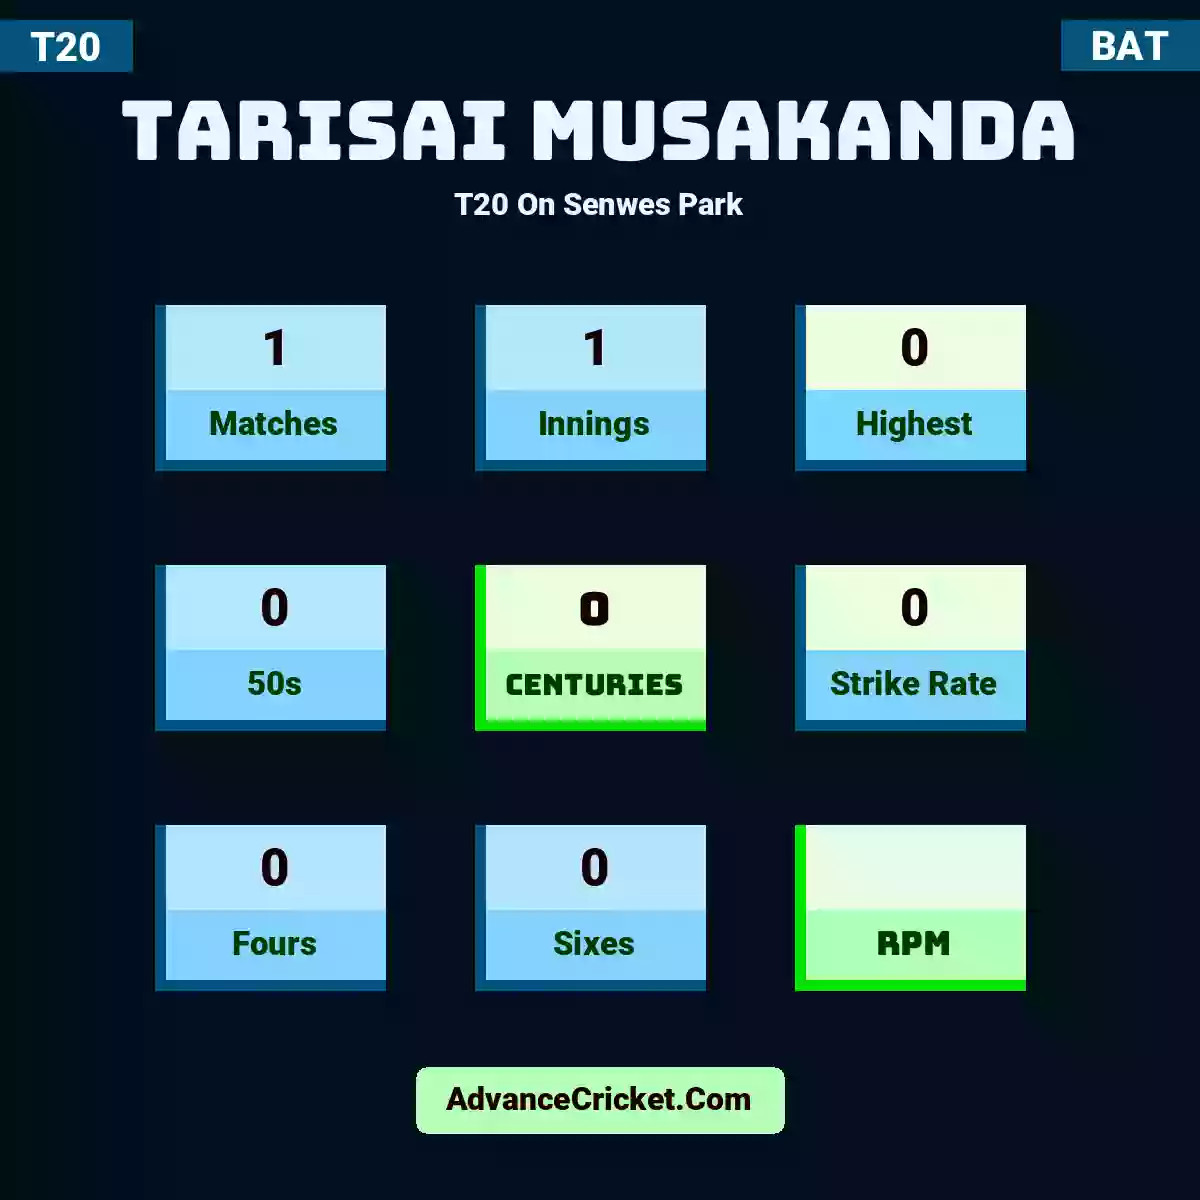 Tarisai Musakanda T20  On Senwes Park, Tarisai Musakanda played 1 matches, scored 0 runs as highest, 0 half-centuries, and 0 centuries, with a strike rate of 0. T.Musakanda hit 0 fours and 0 sixes.